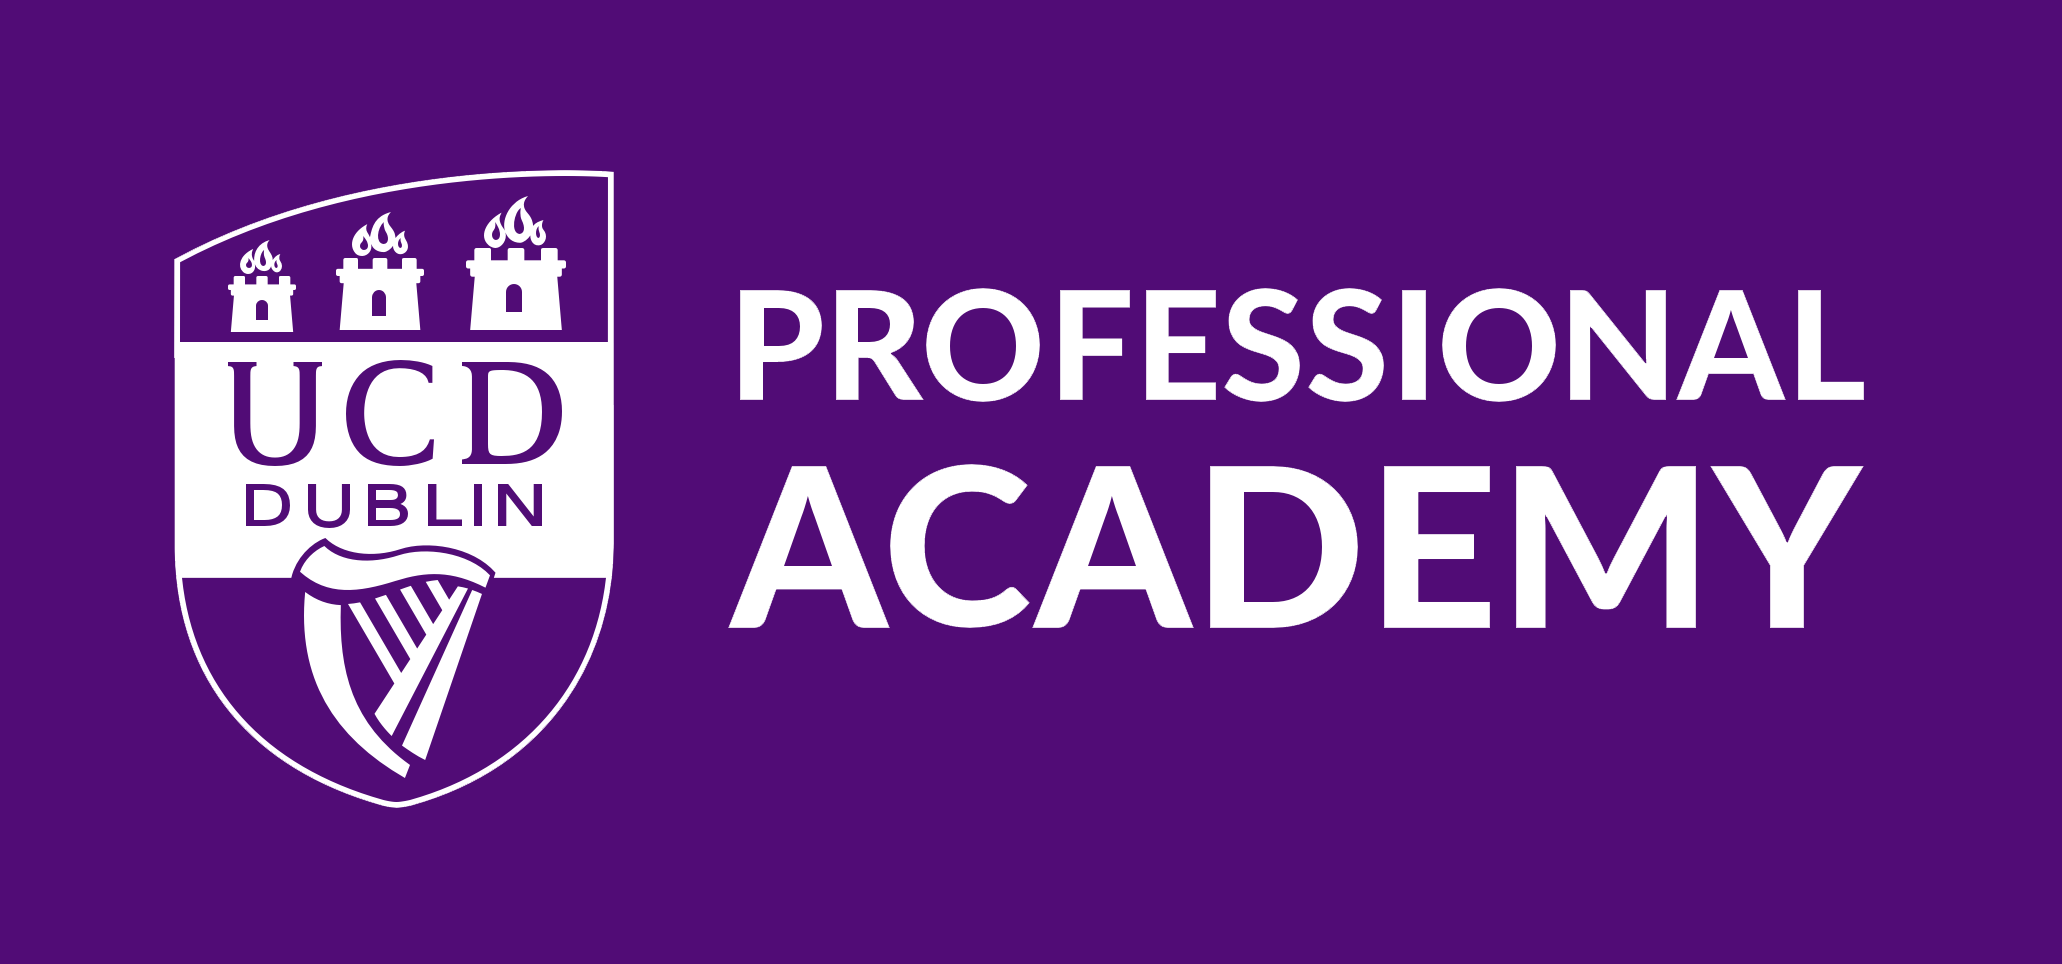 UCD Professional Academy